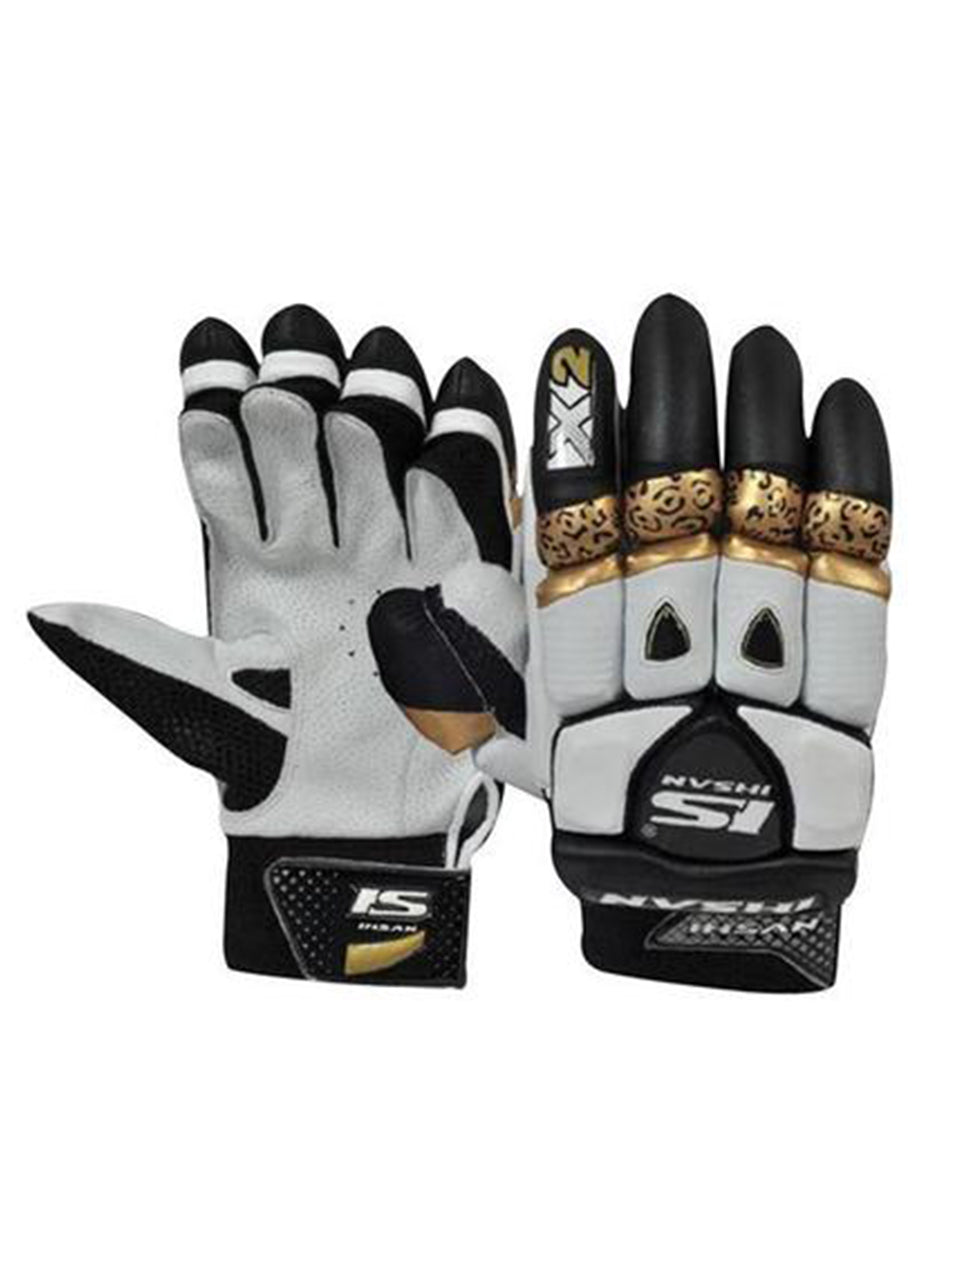 Prosportsase -Ihsan Cricket Batting Gloves X2 LYNX